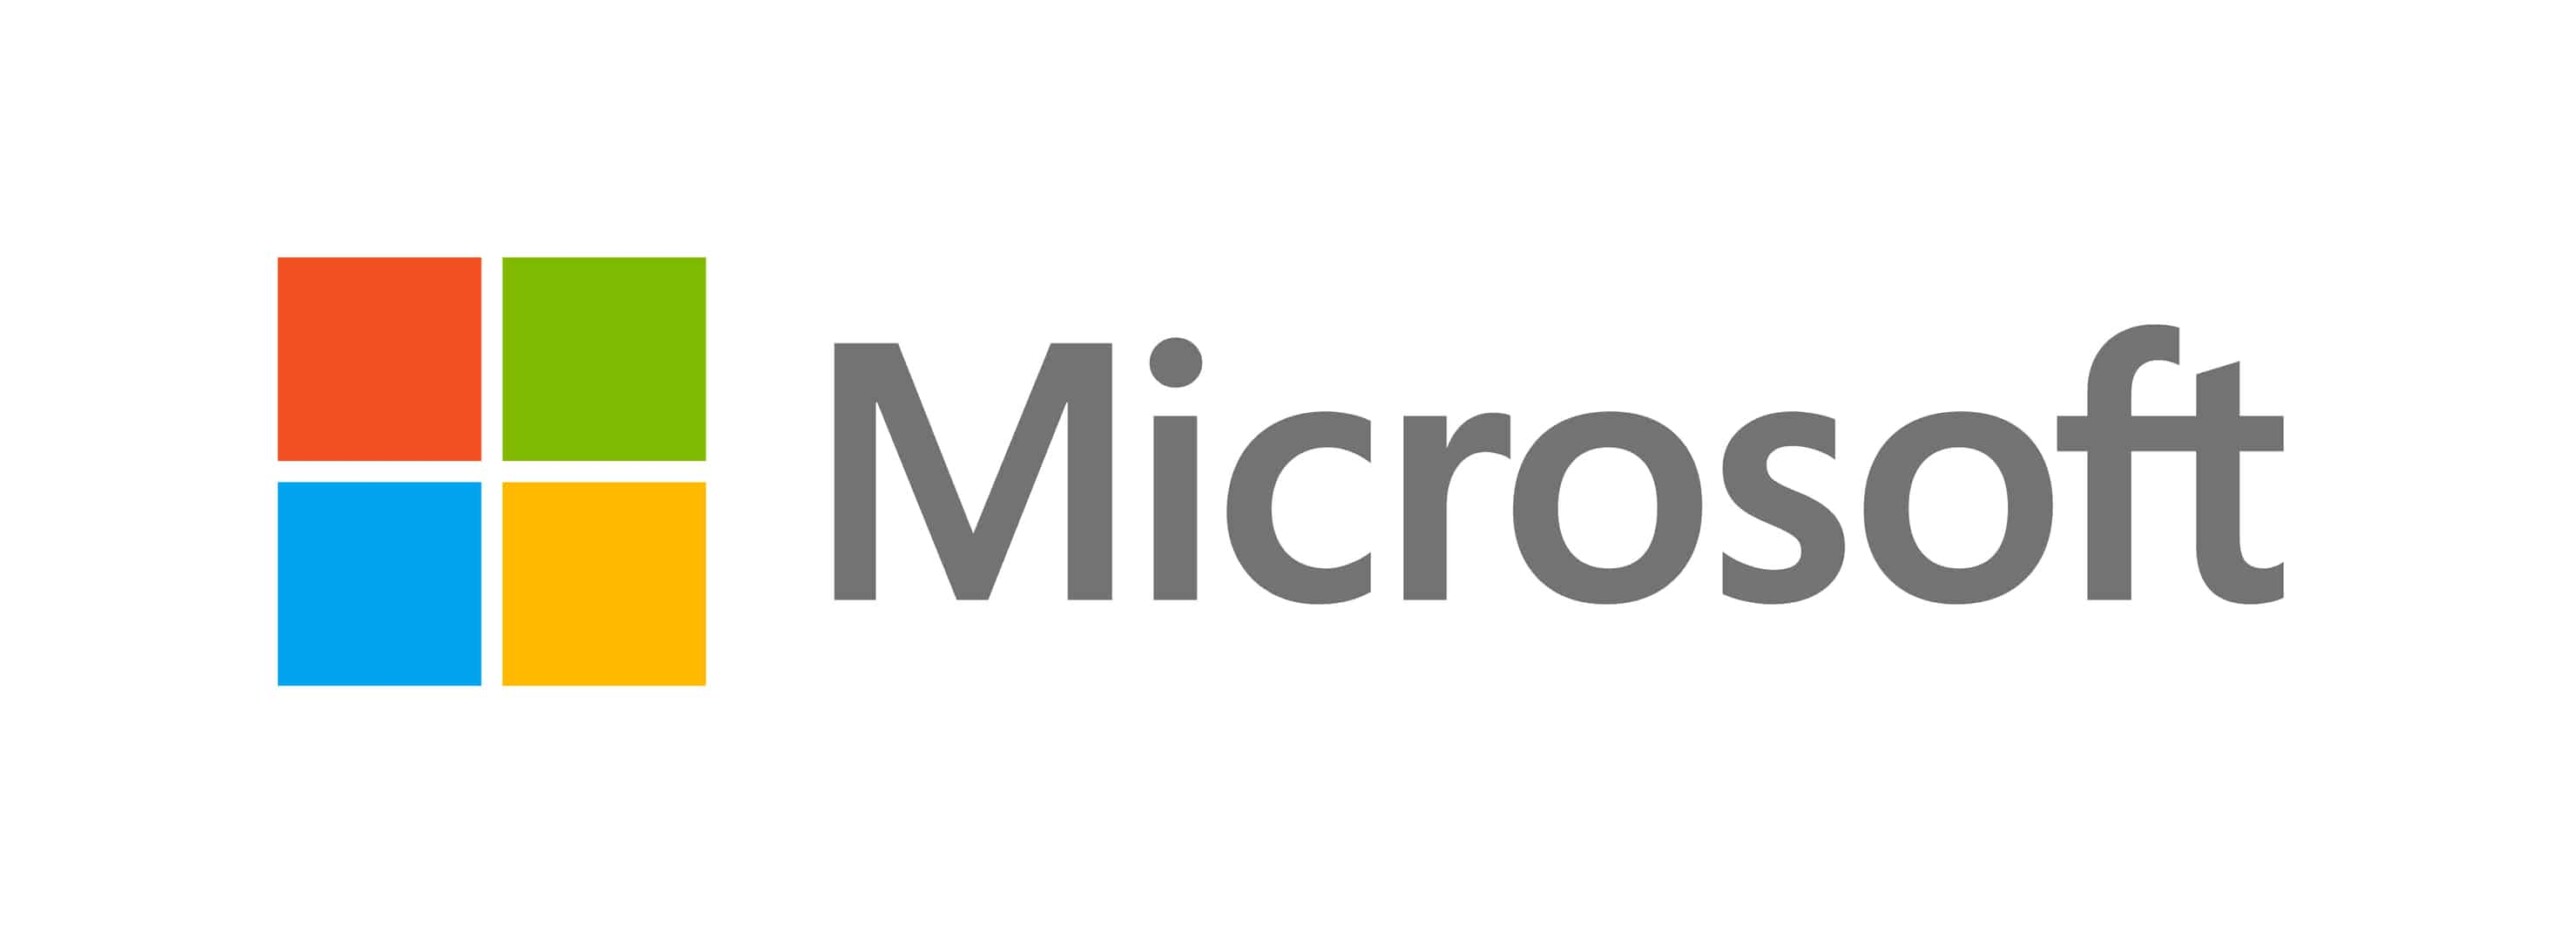 Microsoft verhoogt dividend